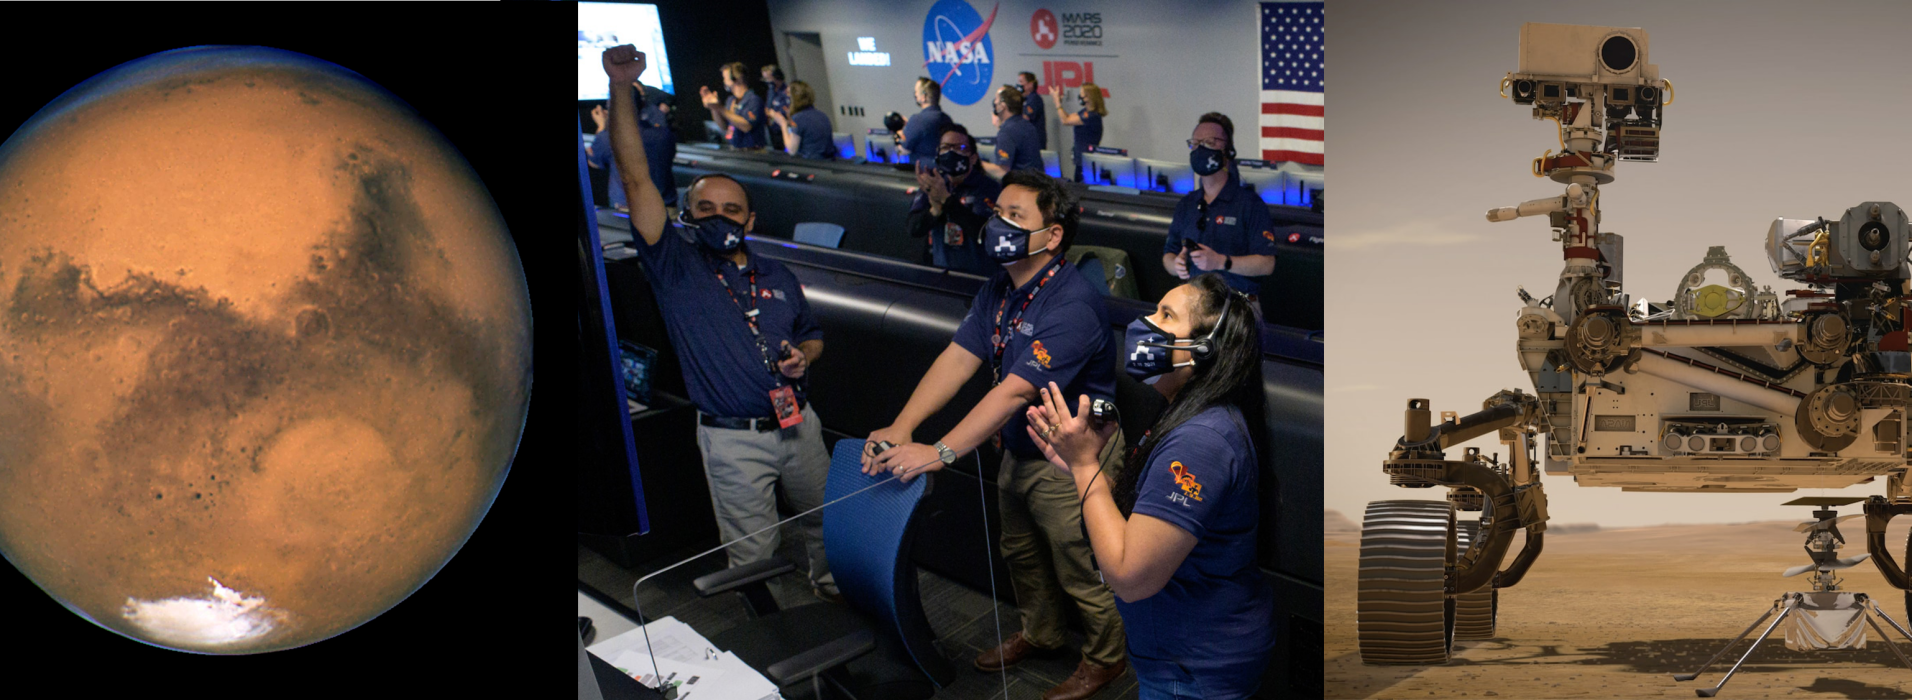 Mars globe NASA control room Perseverance Rover